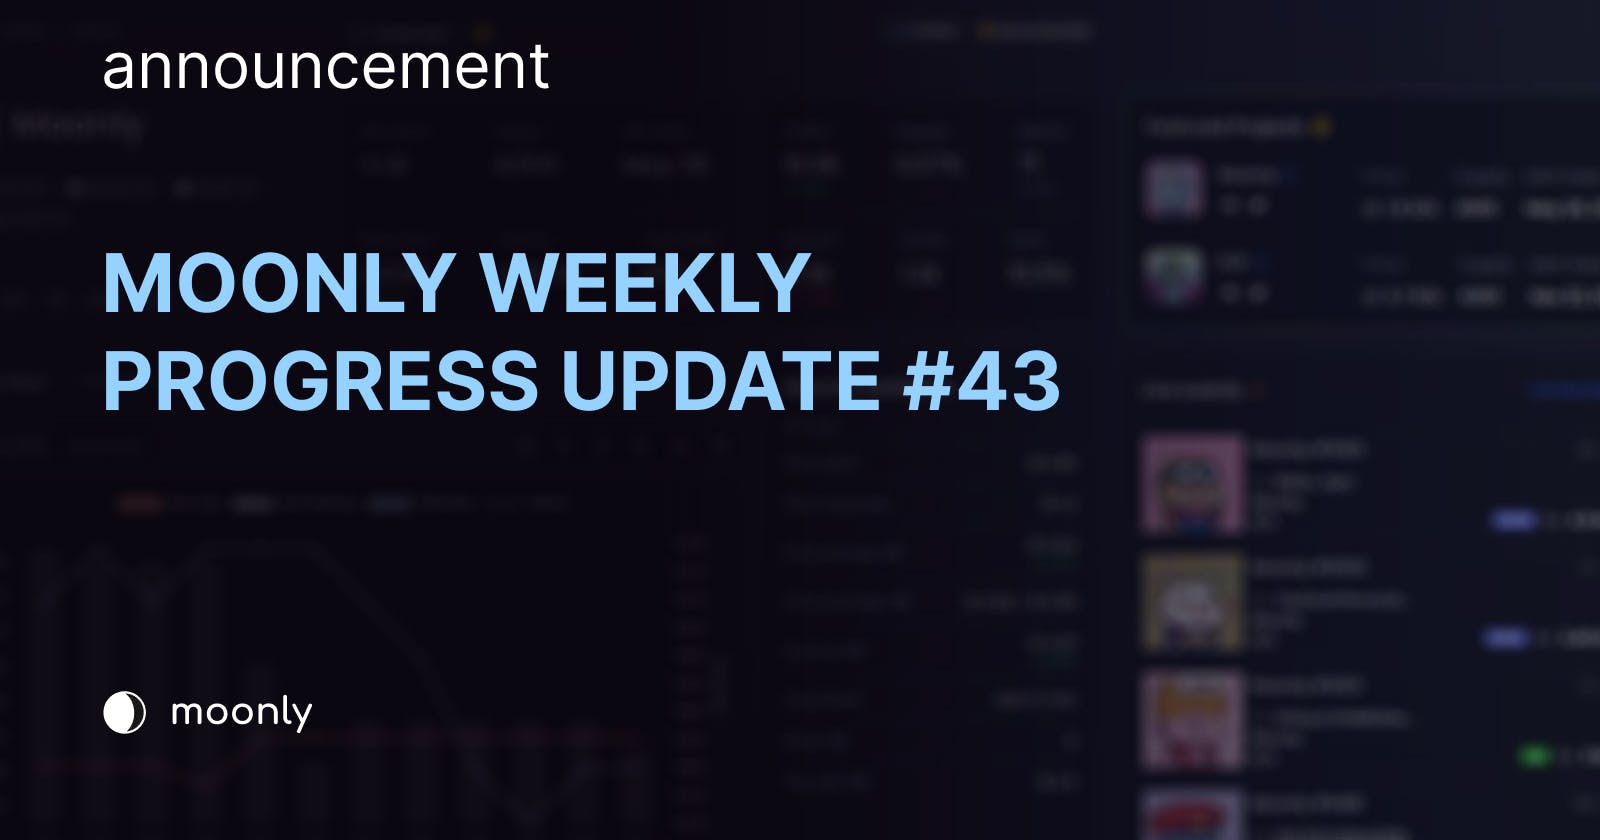 Moonly weekly progress update #43